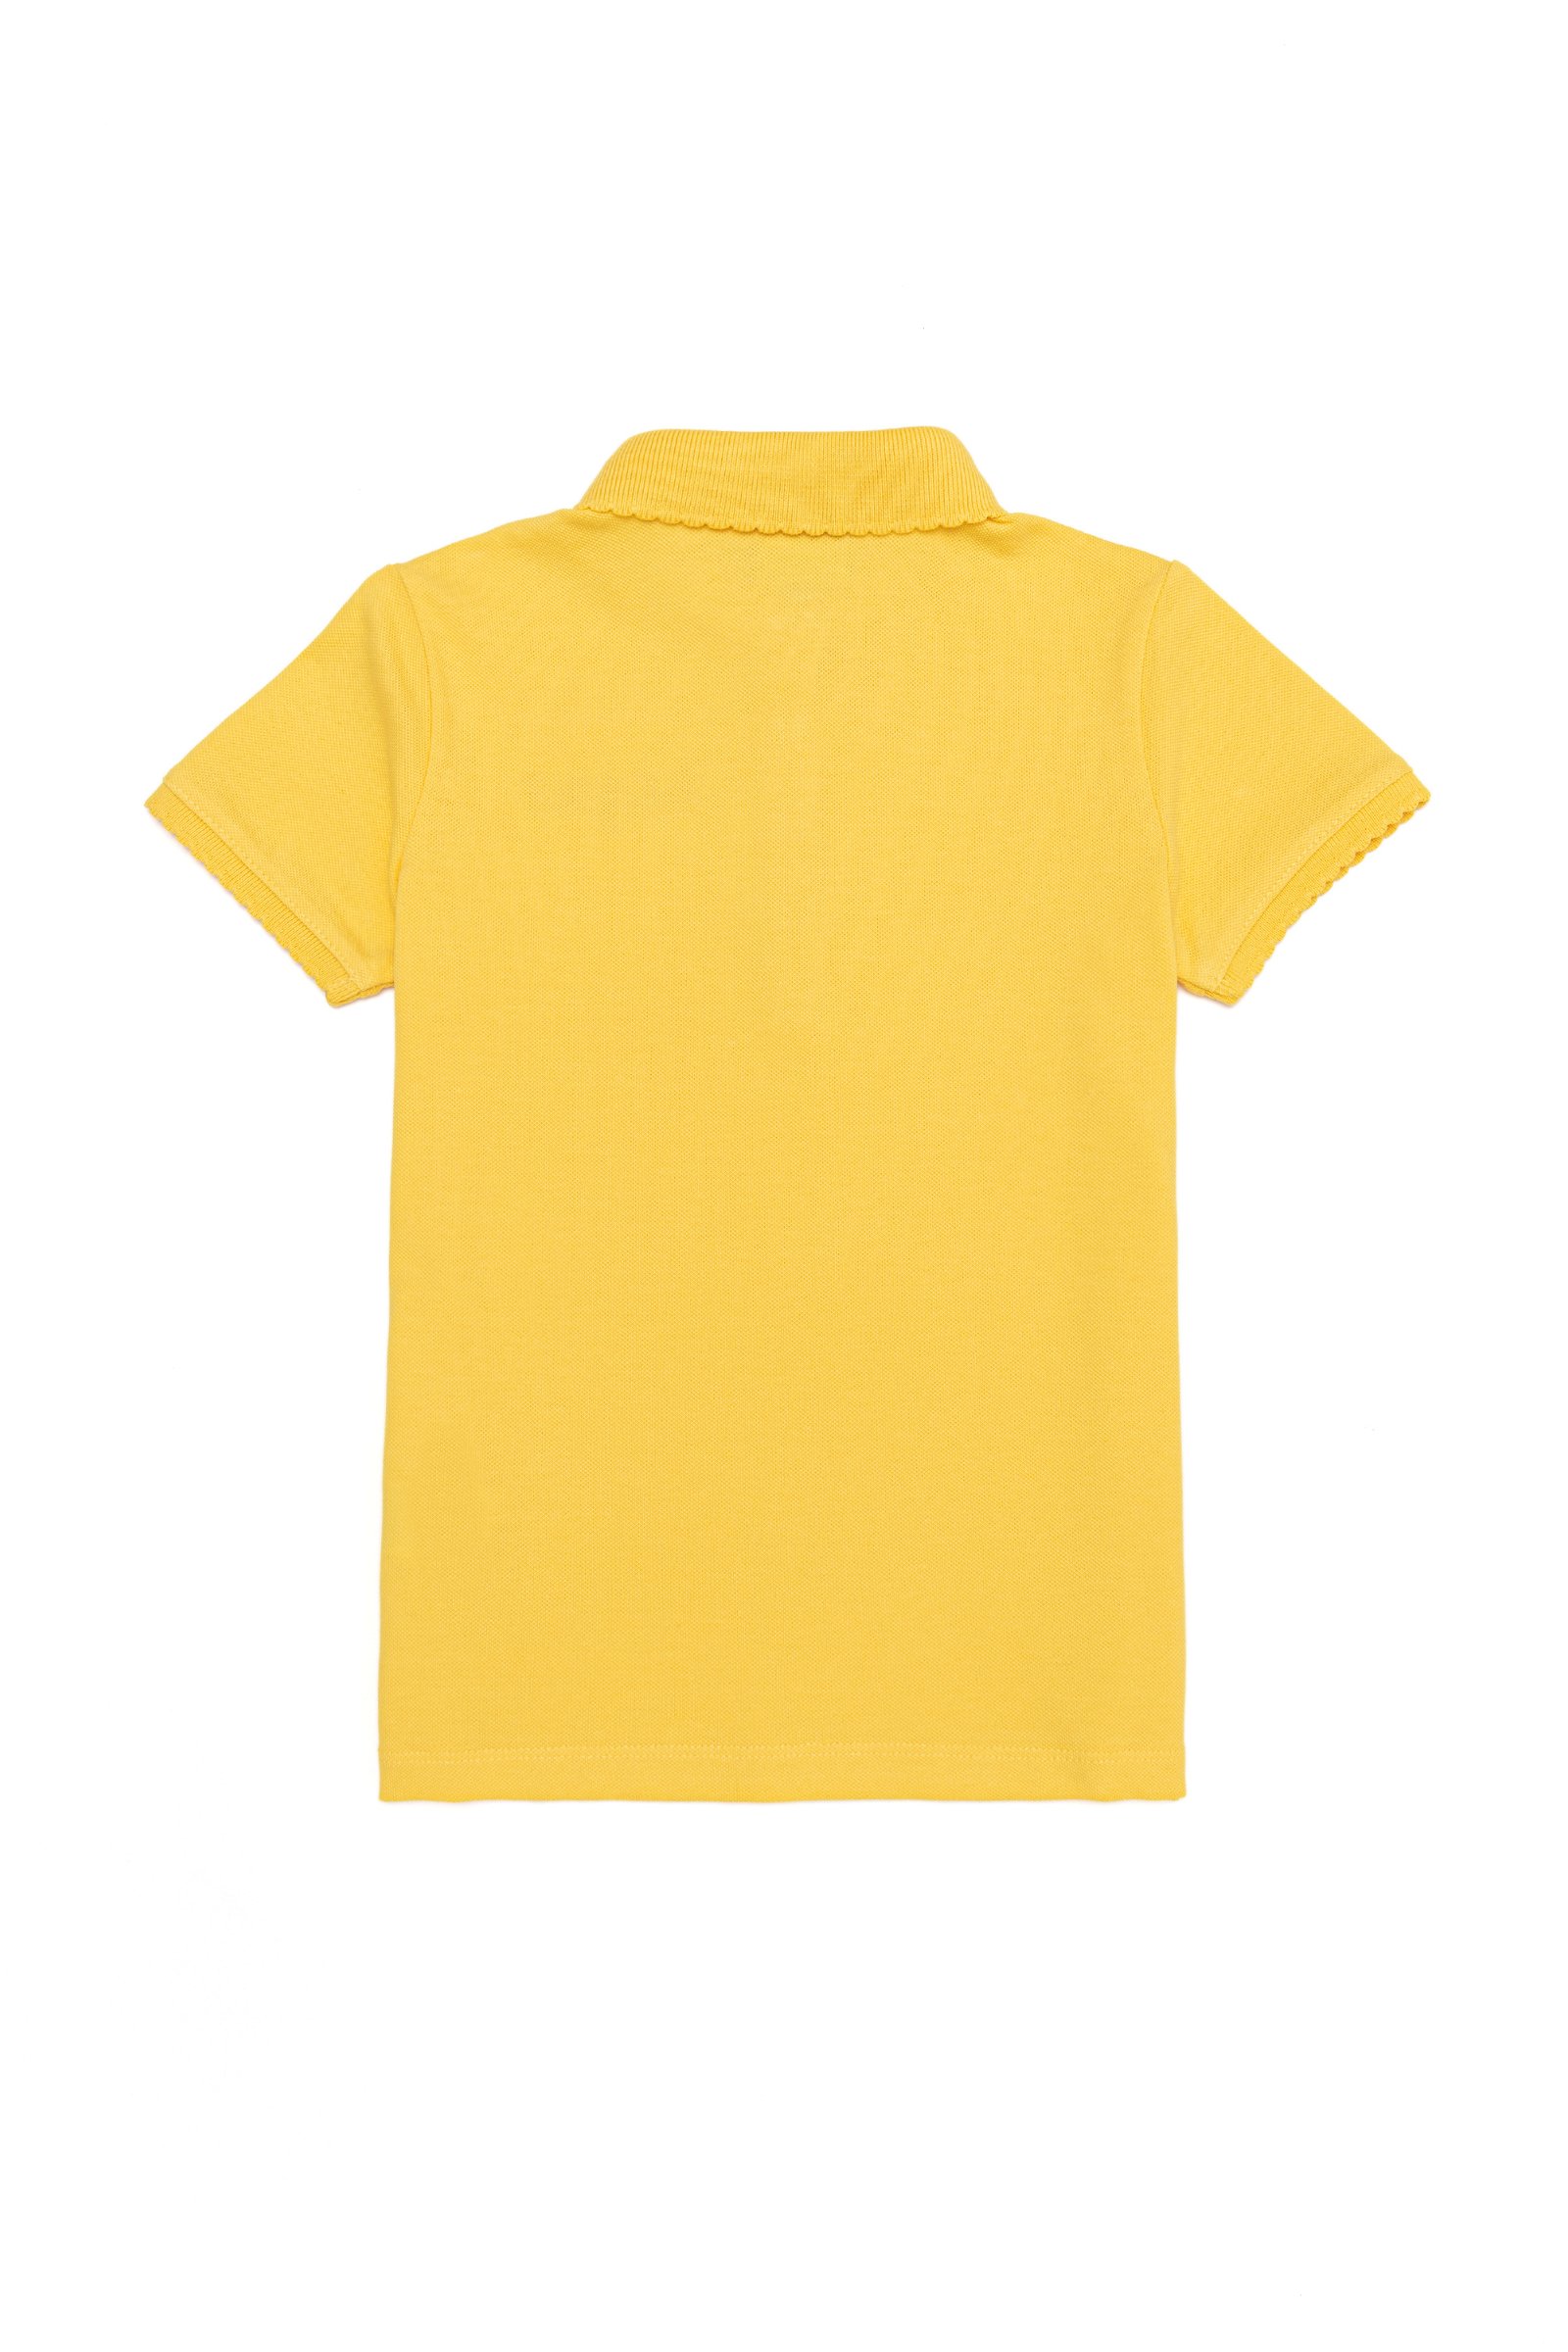 تی شرت یقه پولو زرد روشن  استاندارد فیت  دخترانه یو اس پولو | US POLO ASSN